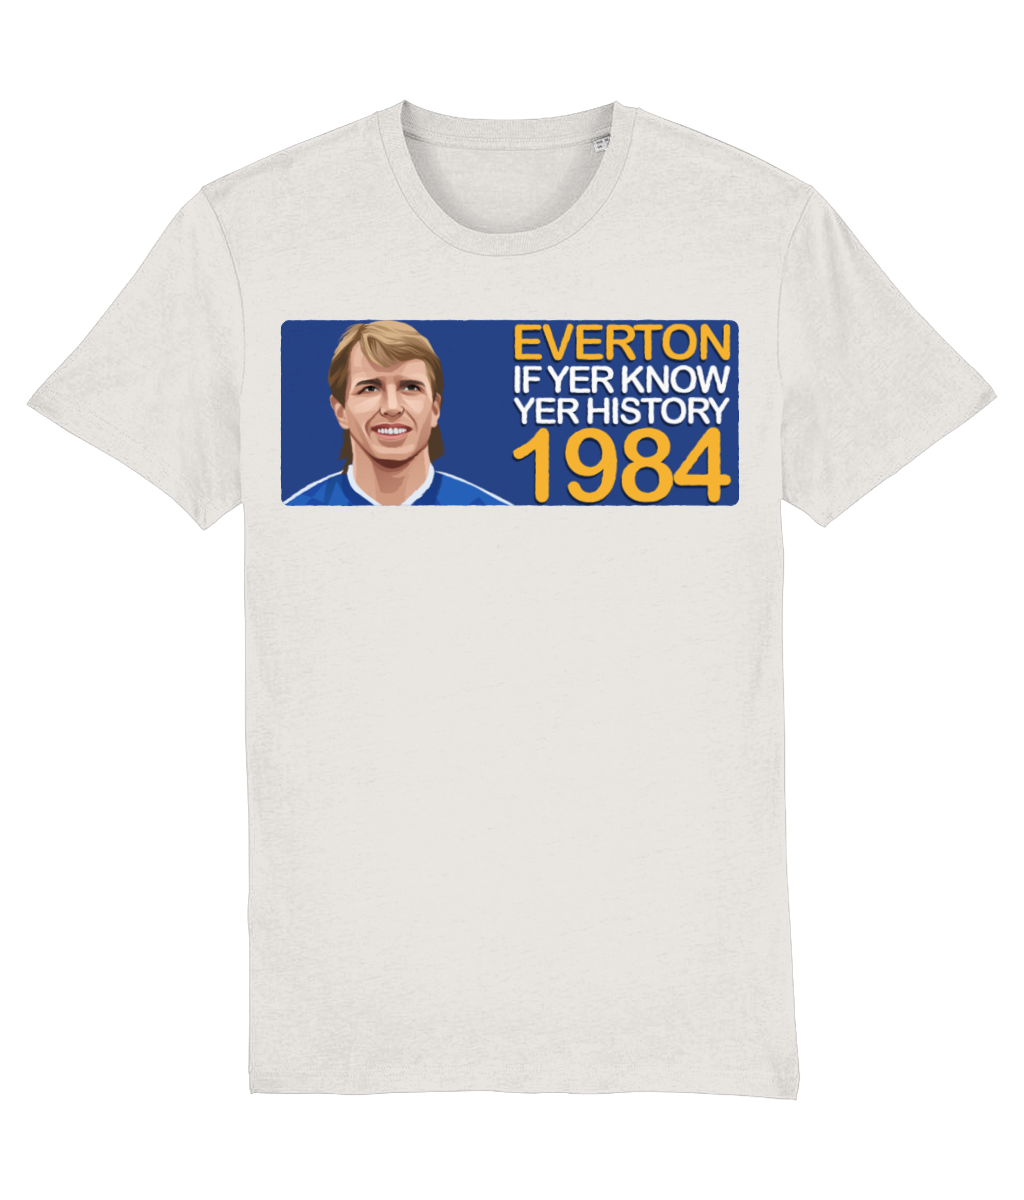 Everton 1984 Trevor Steven If Yer Know Yer History Unisex T-Shirt Stanley/Stella Retrotext Vintage White XX-Small 